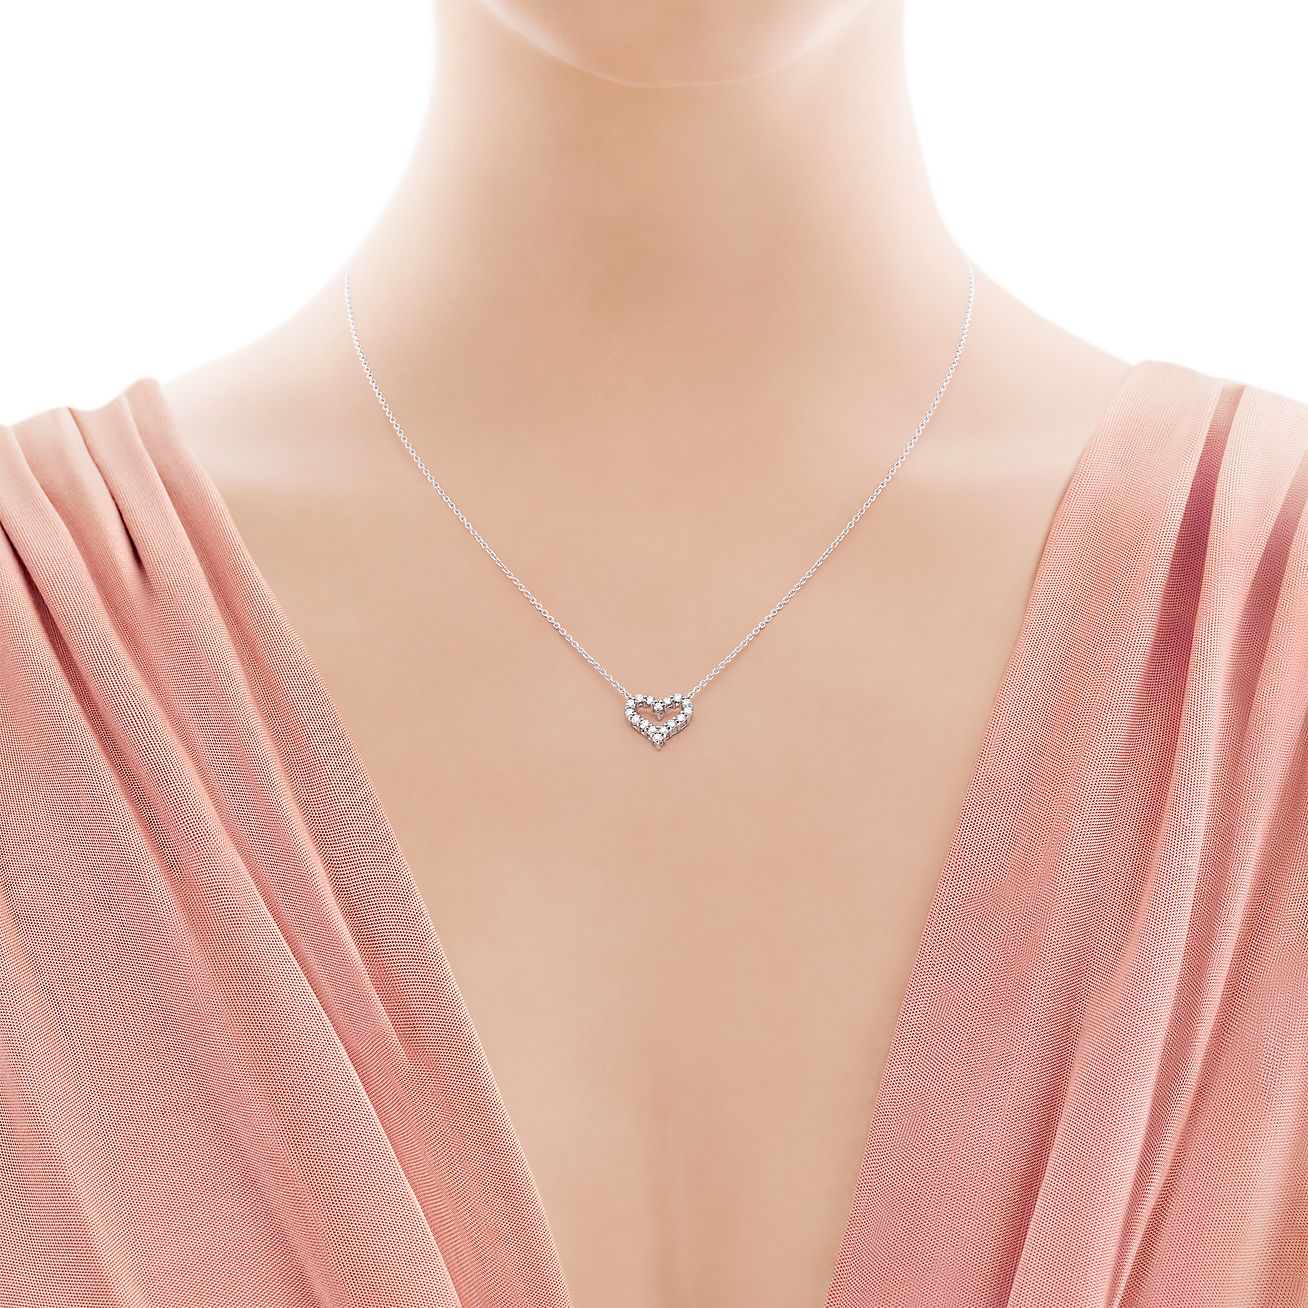 tiffany little heart necklace